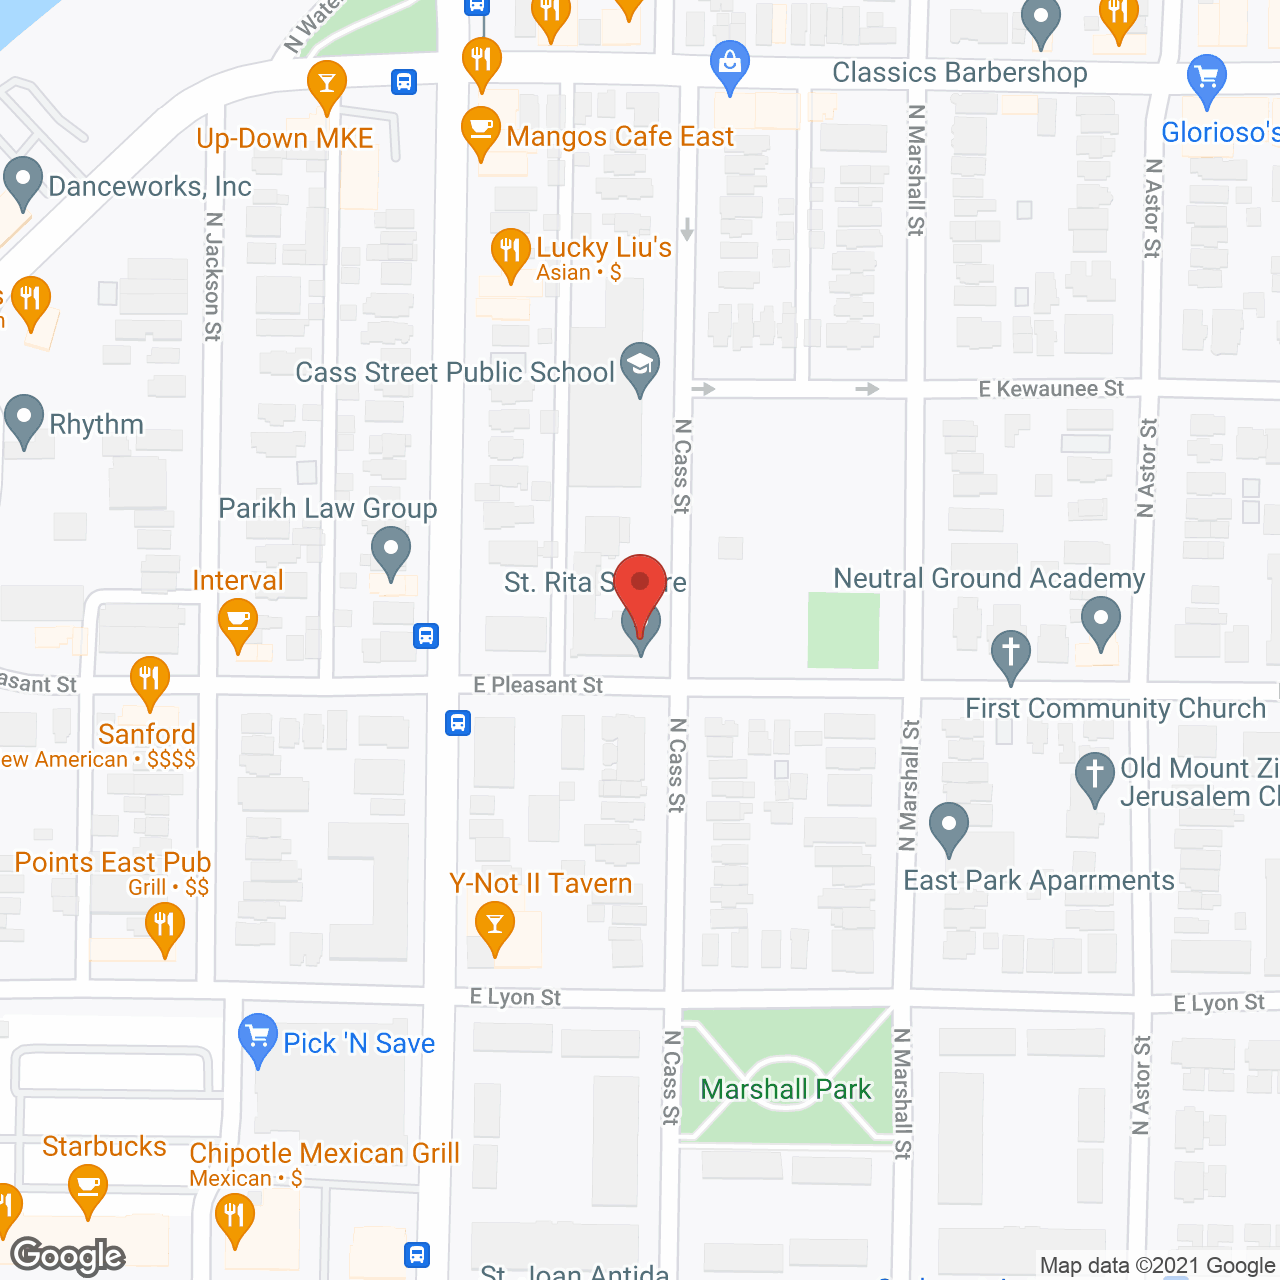 St. Rita Square in google map